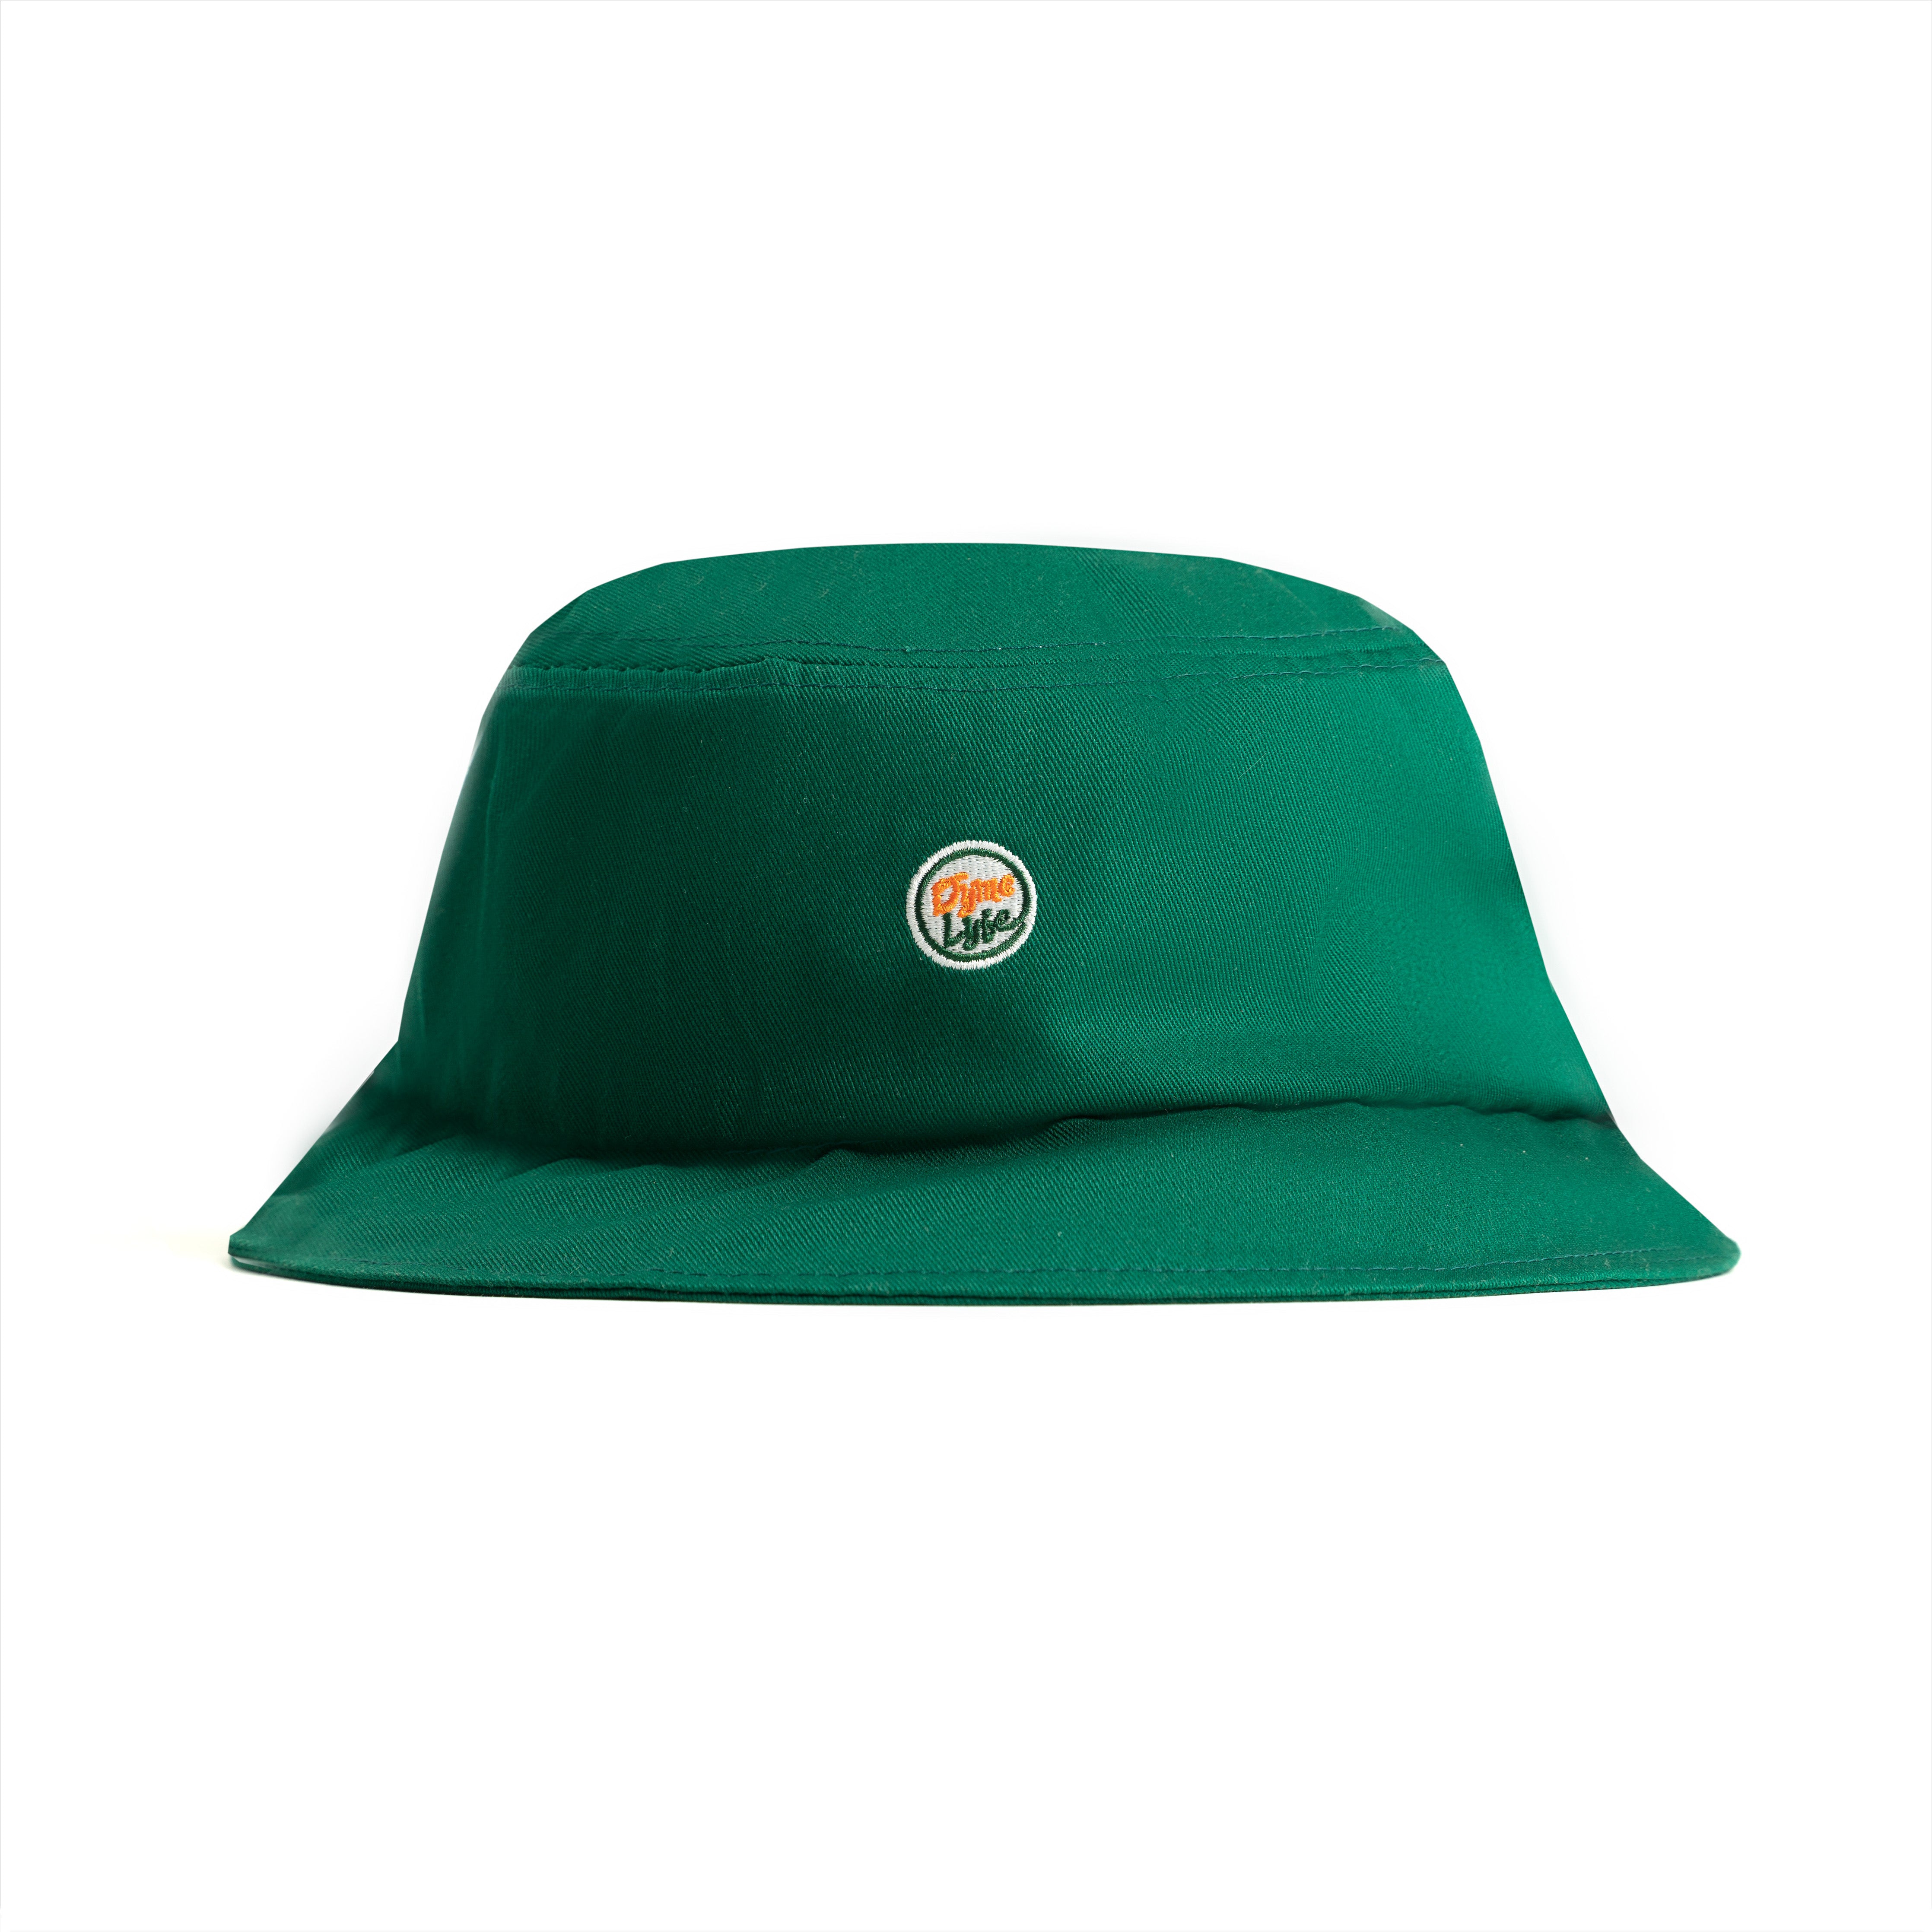 Miami Hurricanes Bucket Hat